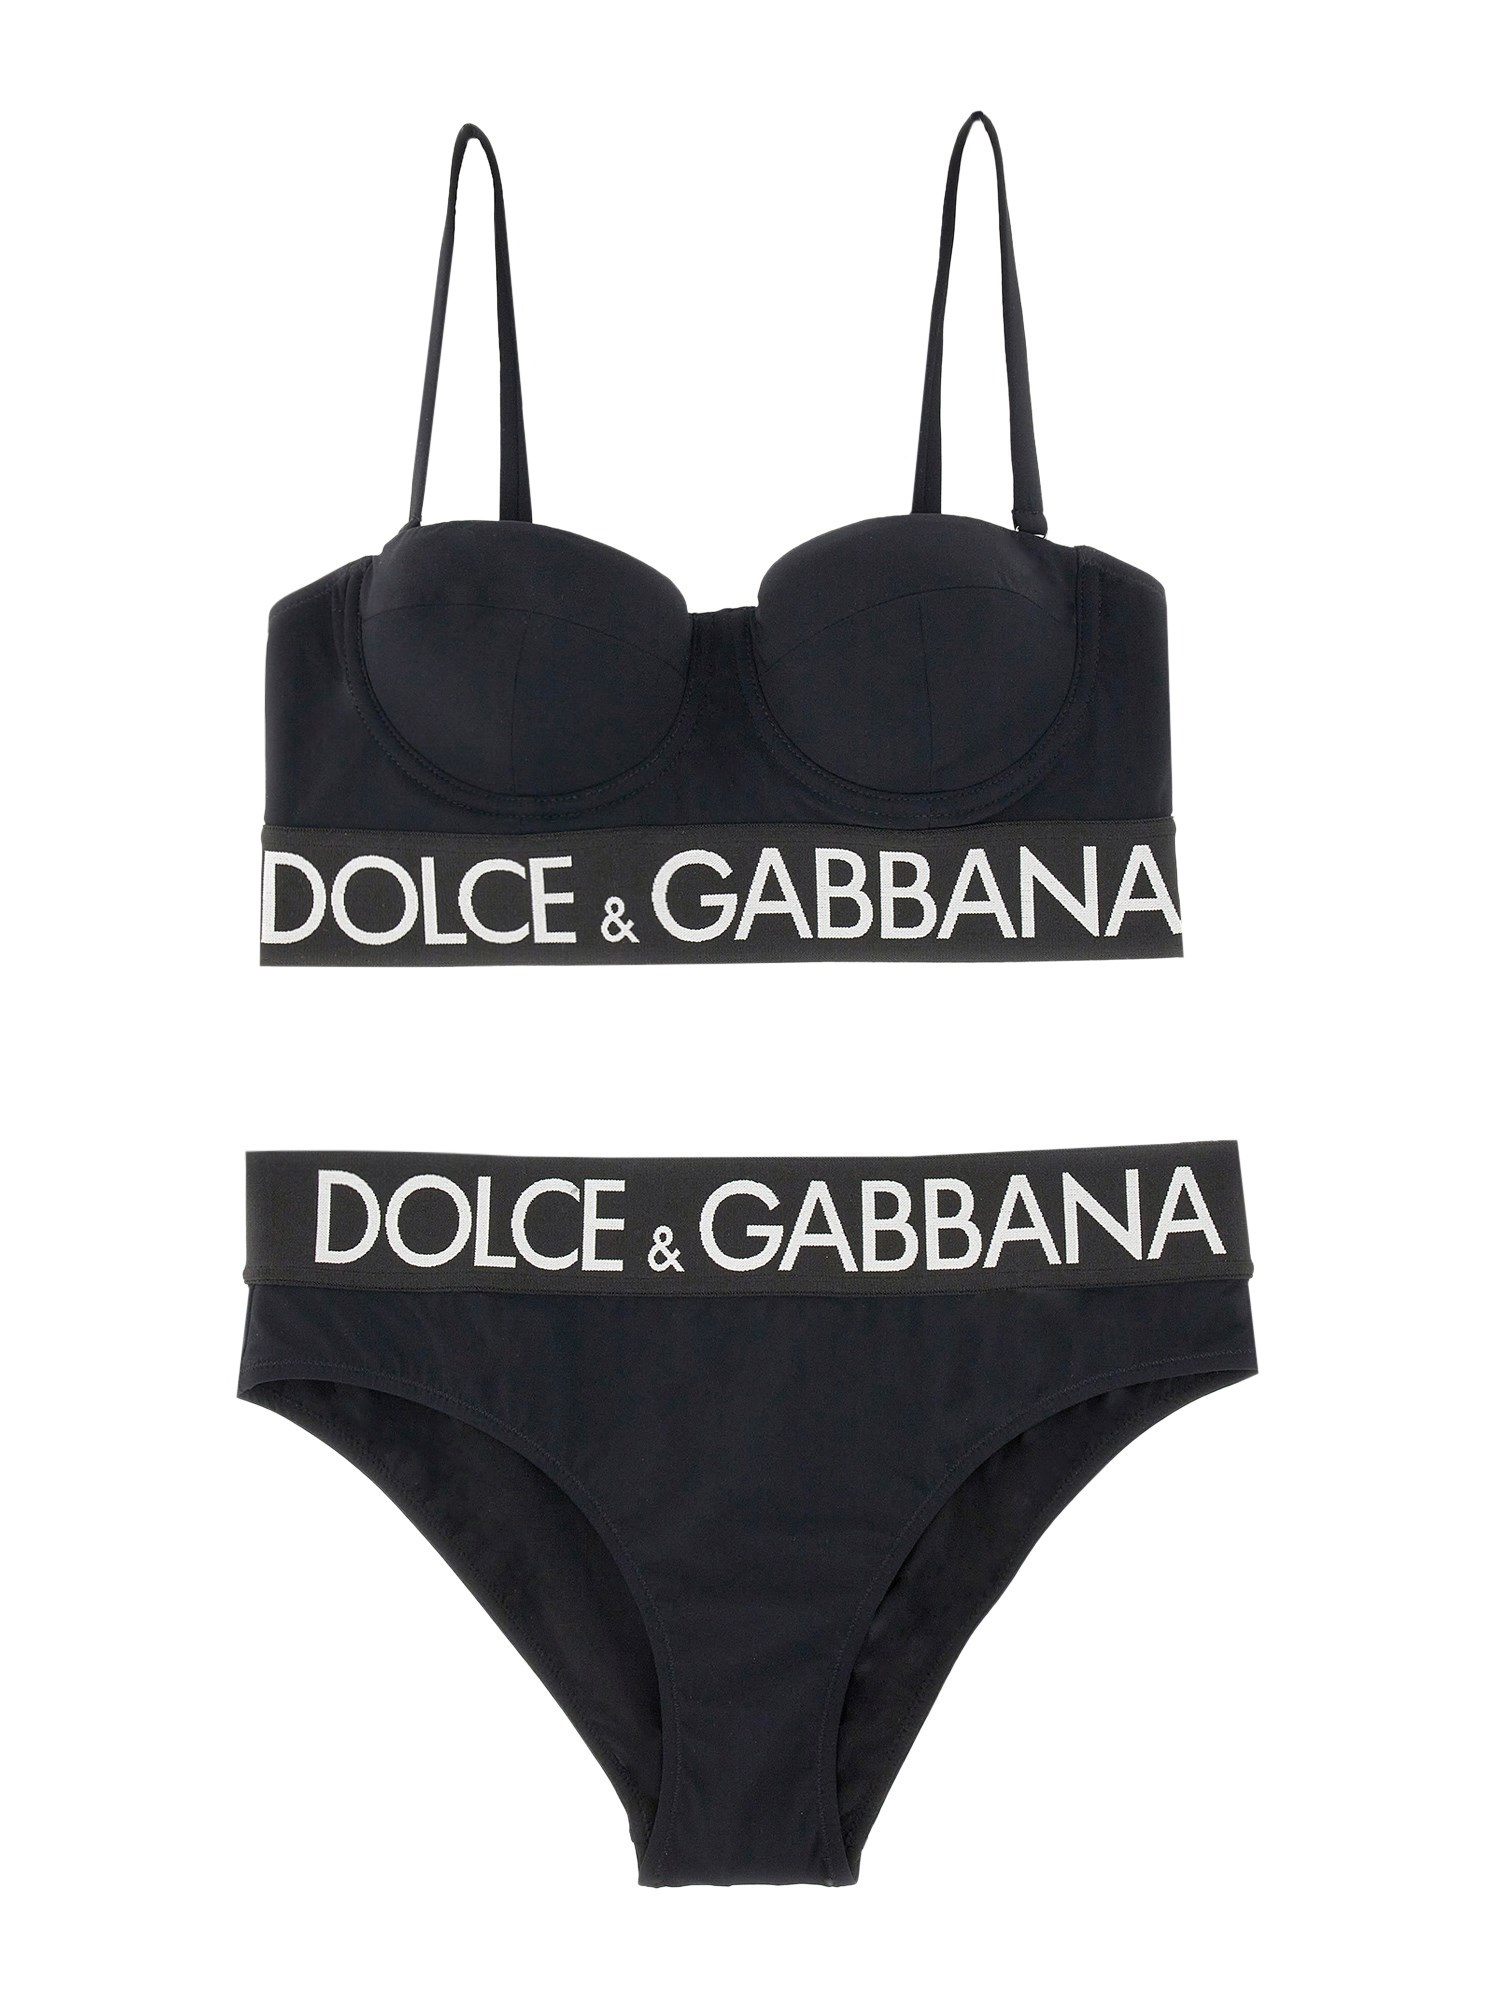 dolce & gabbana two-piece costume